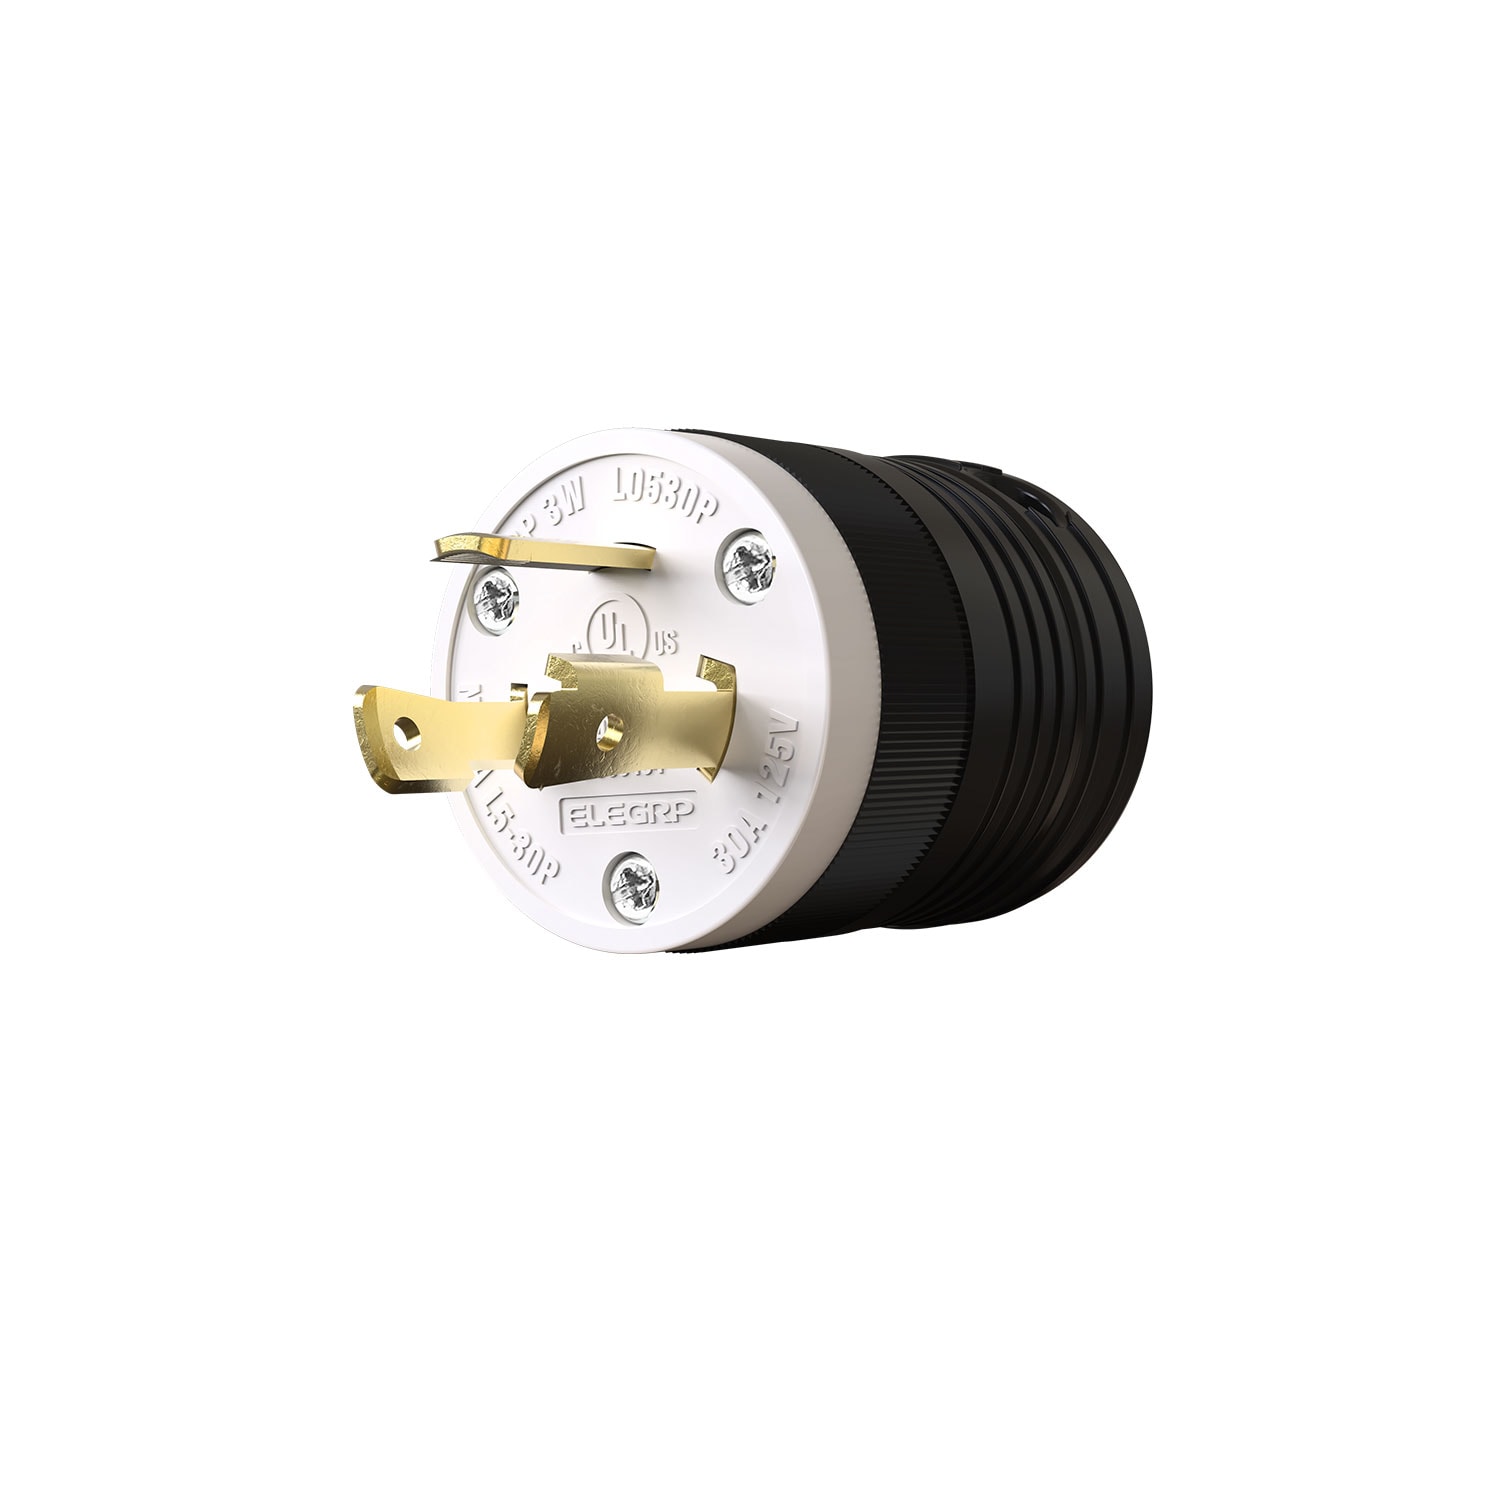 30-Amp 125-Volt NEMA L5-30p 3-wire Grounding Heavy-duty Locking Plug, Black Rubber | - Utilitech L0530P